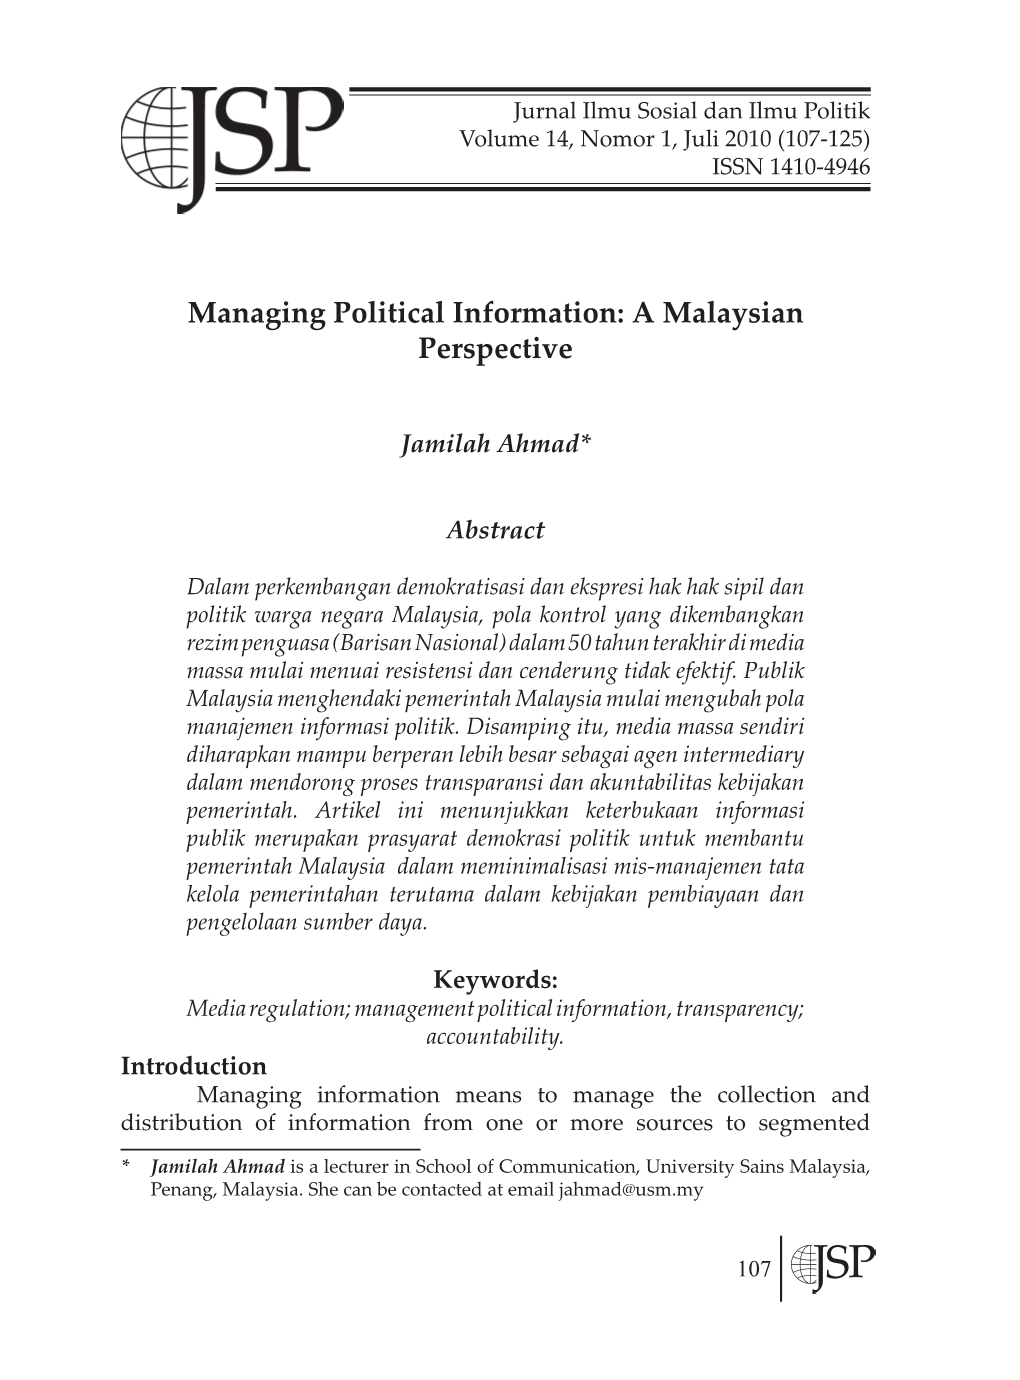 A Malaysian Perspective Volume 14, Nomor 1, Juli 2010 (107-125) ISSN 1410-4946